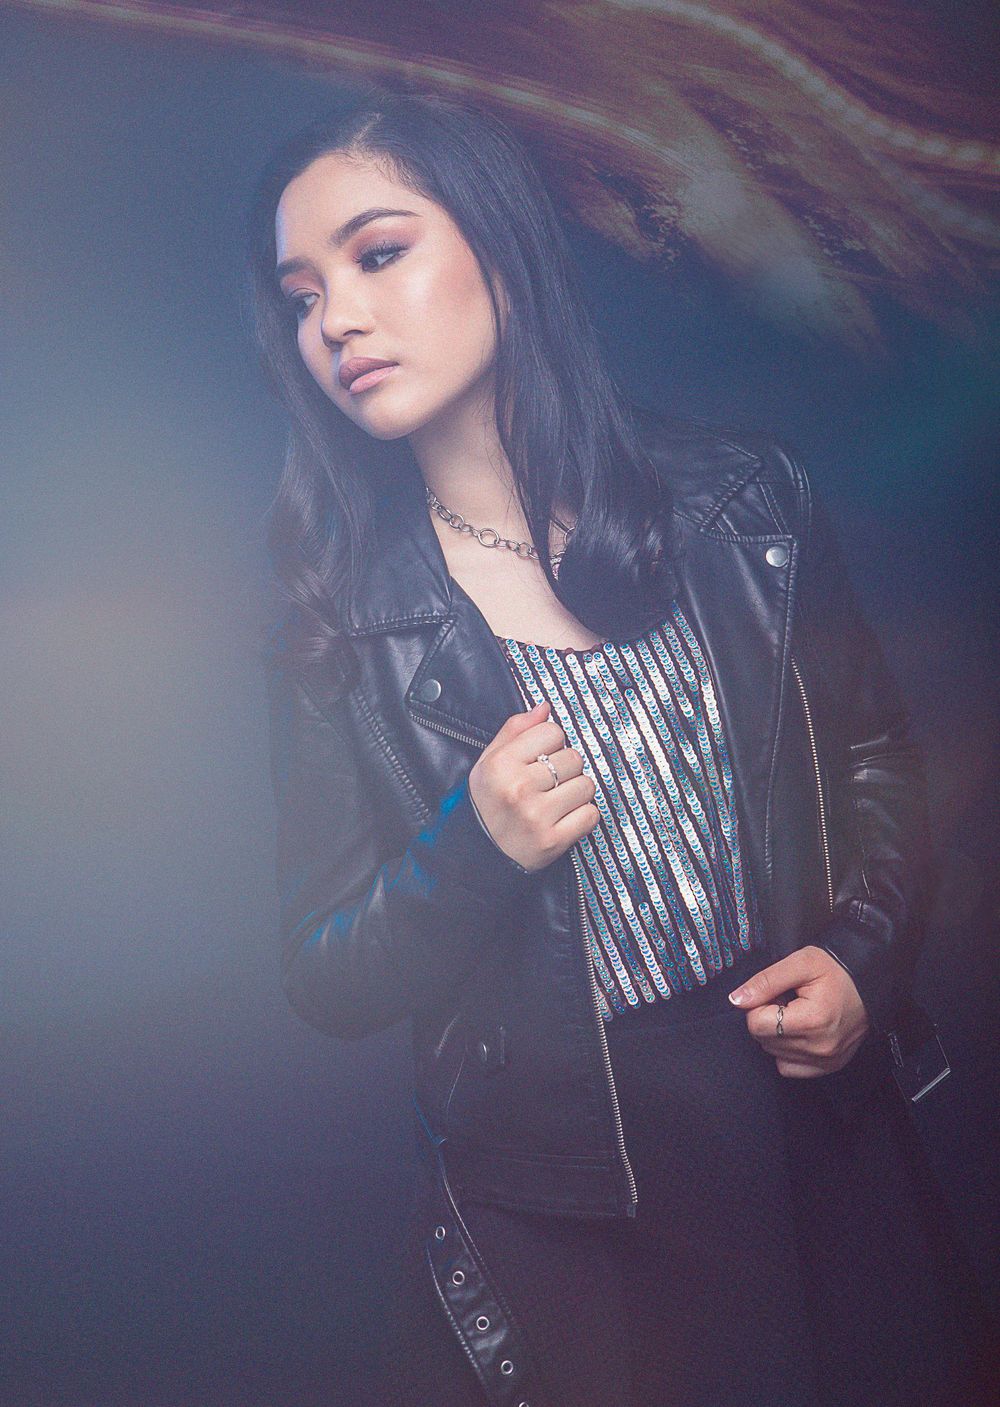 christine lee pop singer disney new wave cool girl photo asian